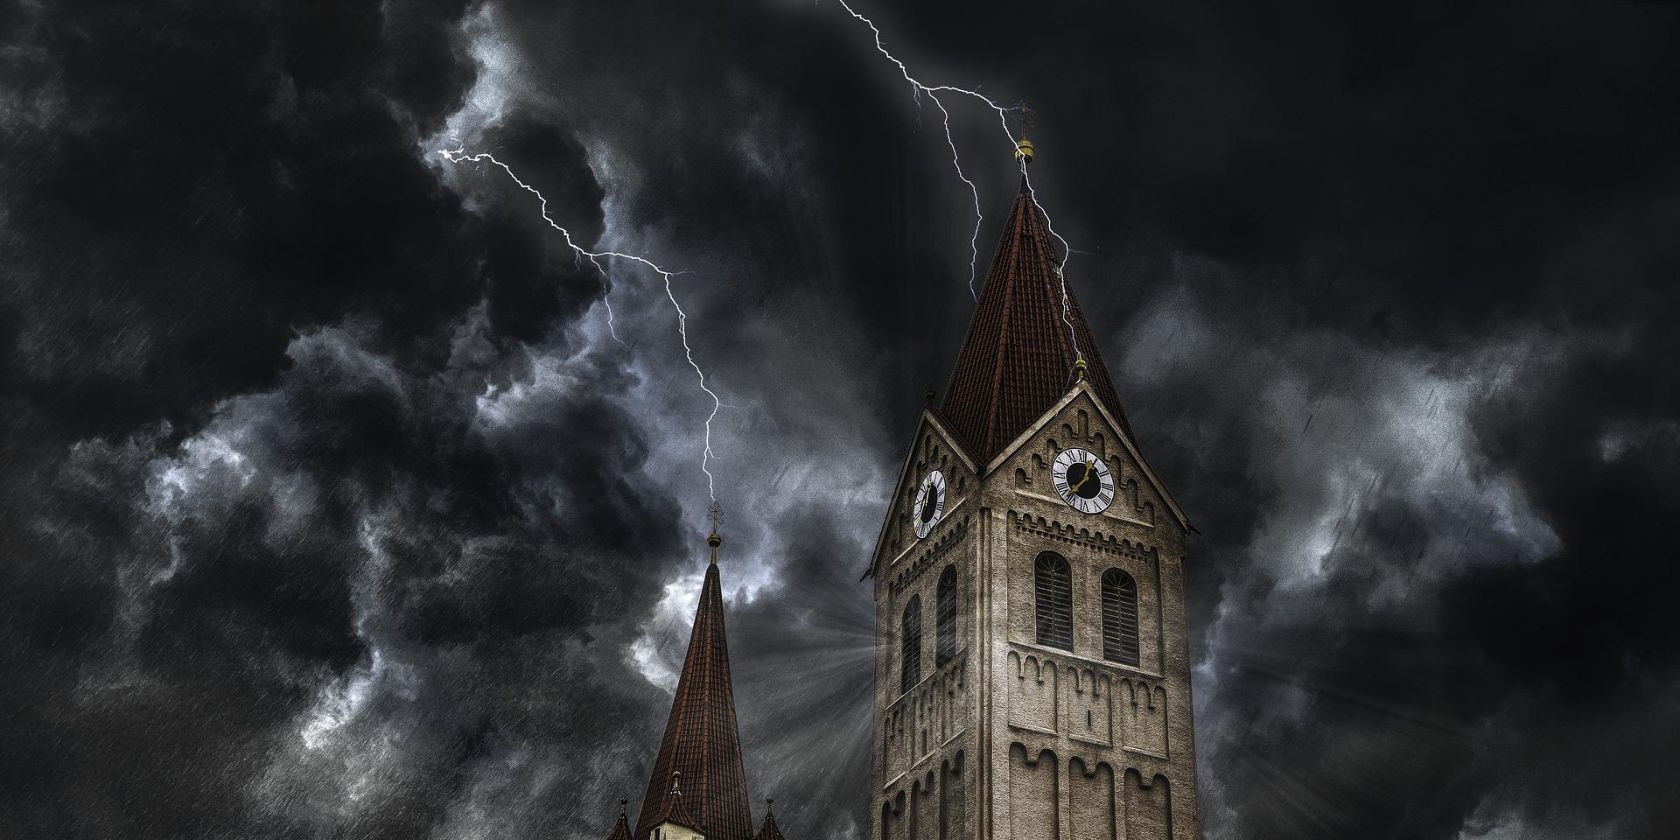 A church tower with lightning striking it on a dark moody night